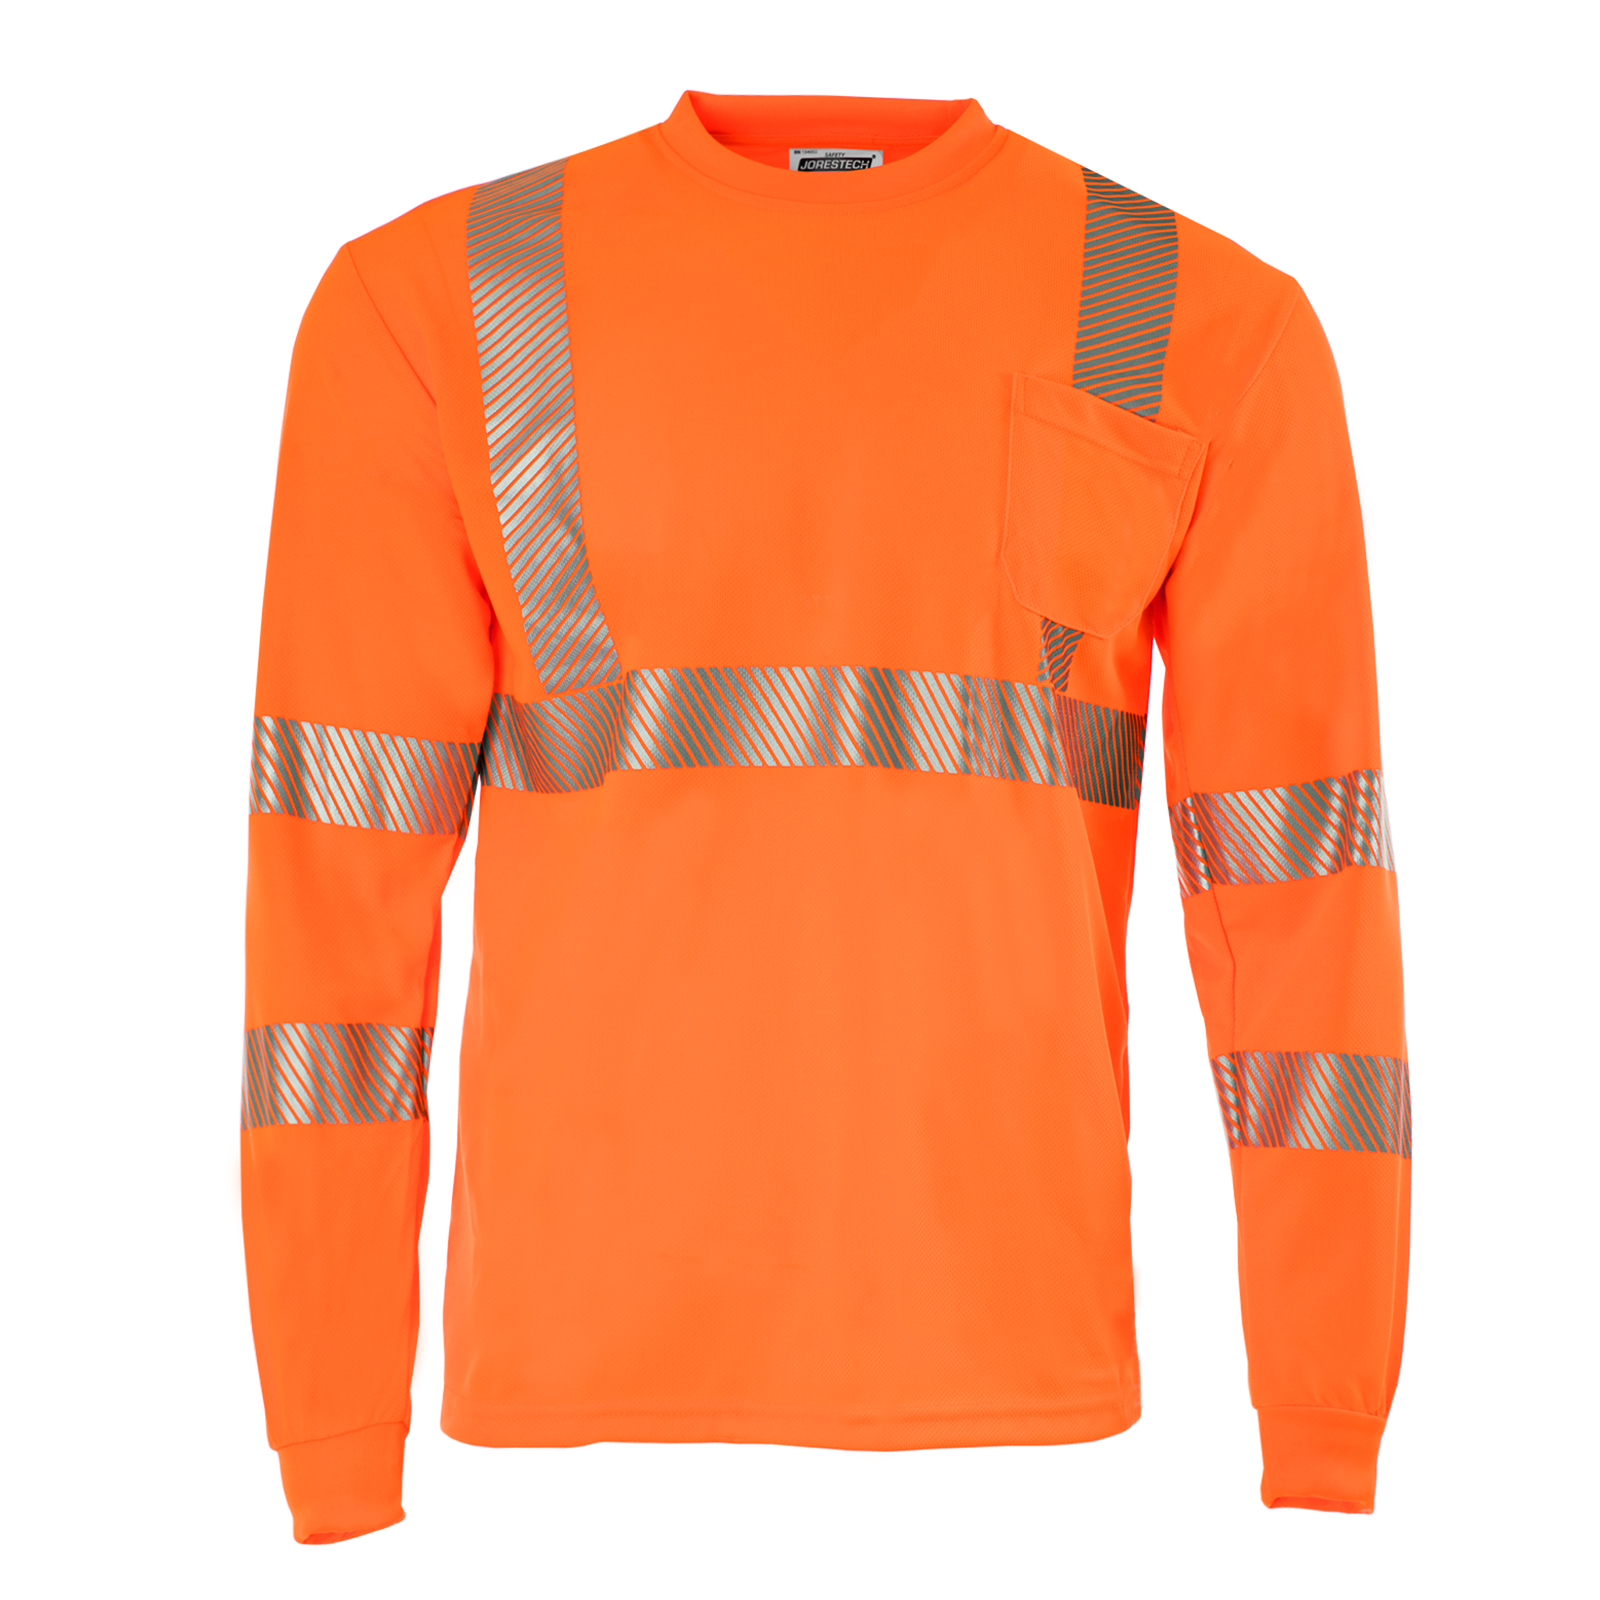 Long Sleeve Heat Transfer Reflective Hi-Vis Safety Shirt